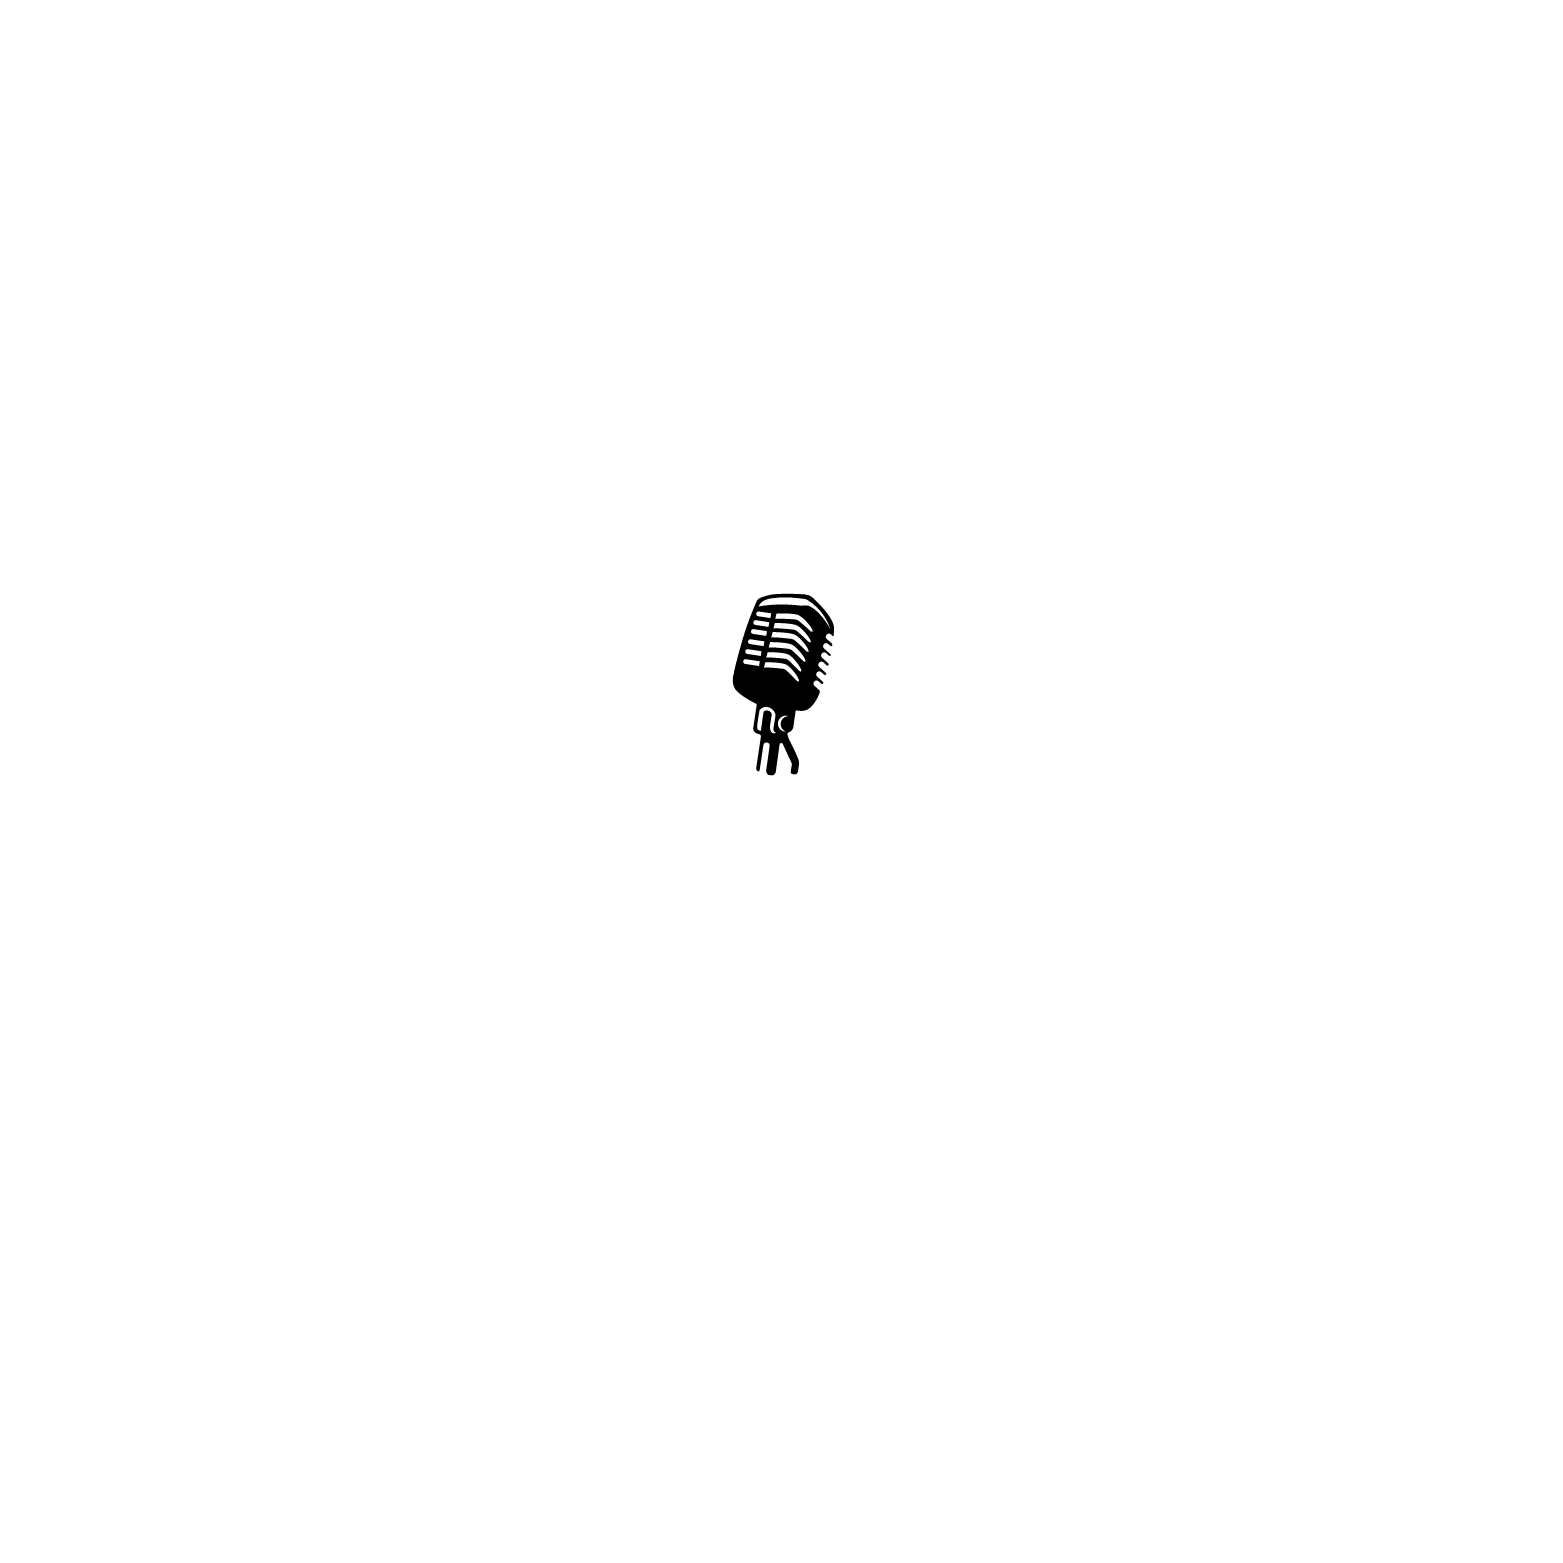 440 Hz logo